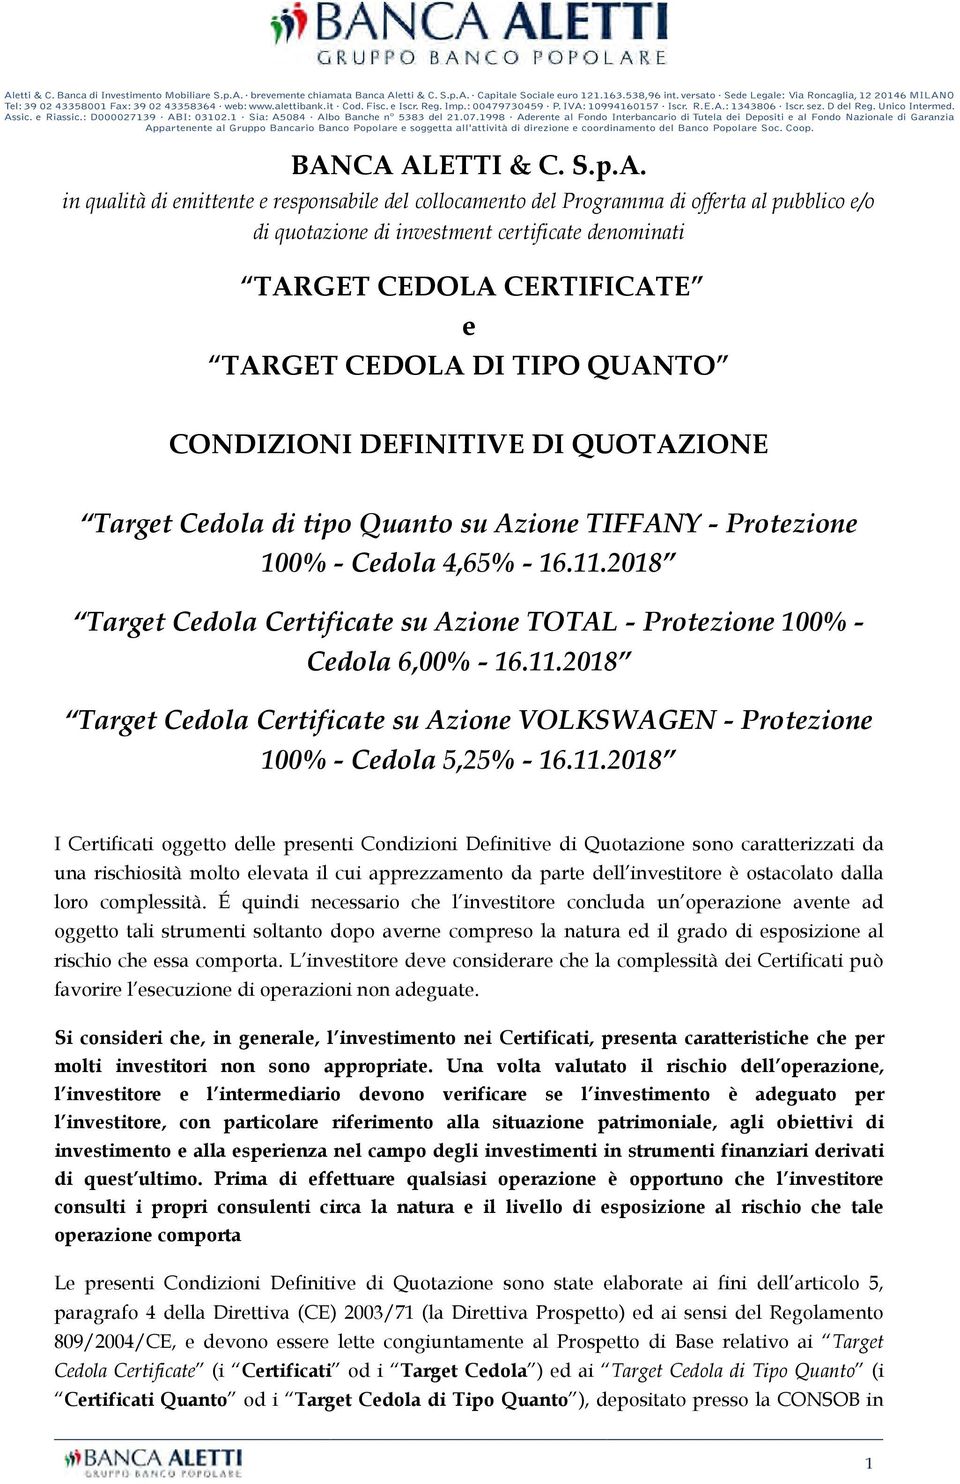 2018 Target Cedola Certificate su Azione TOTAL - Protezione 100% - Cedola 6,00% - 16.11.